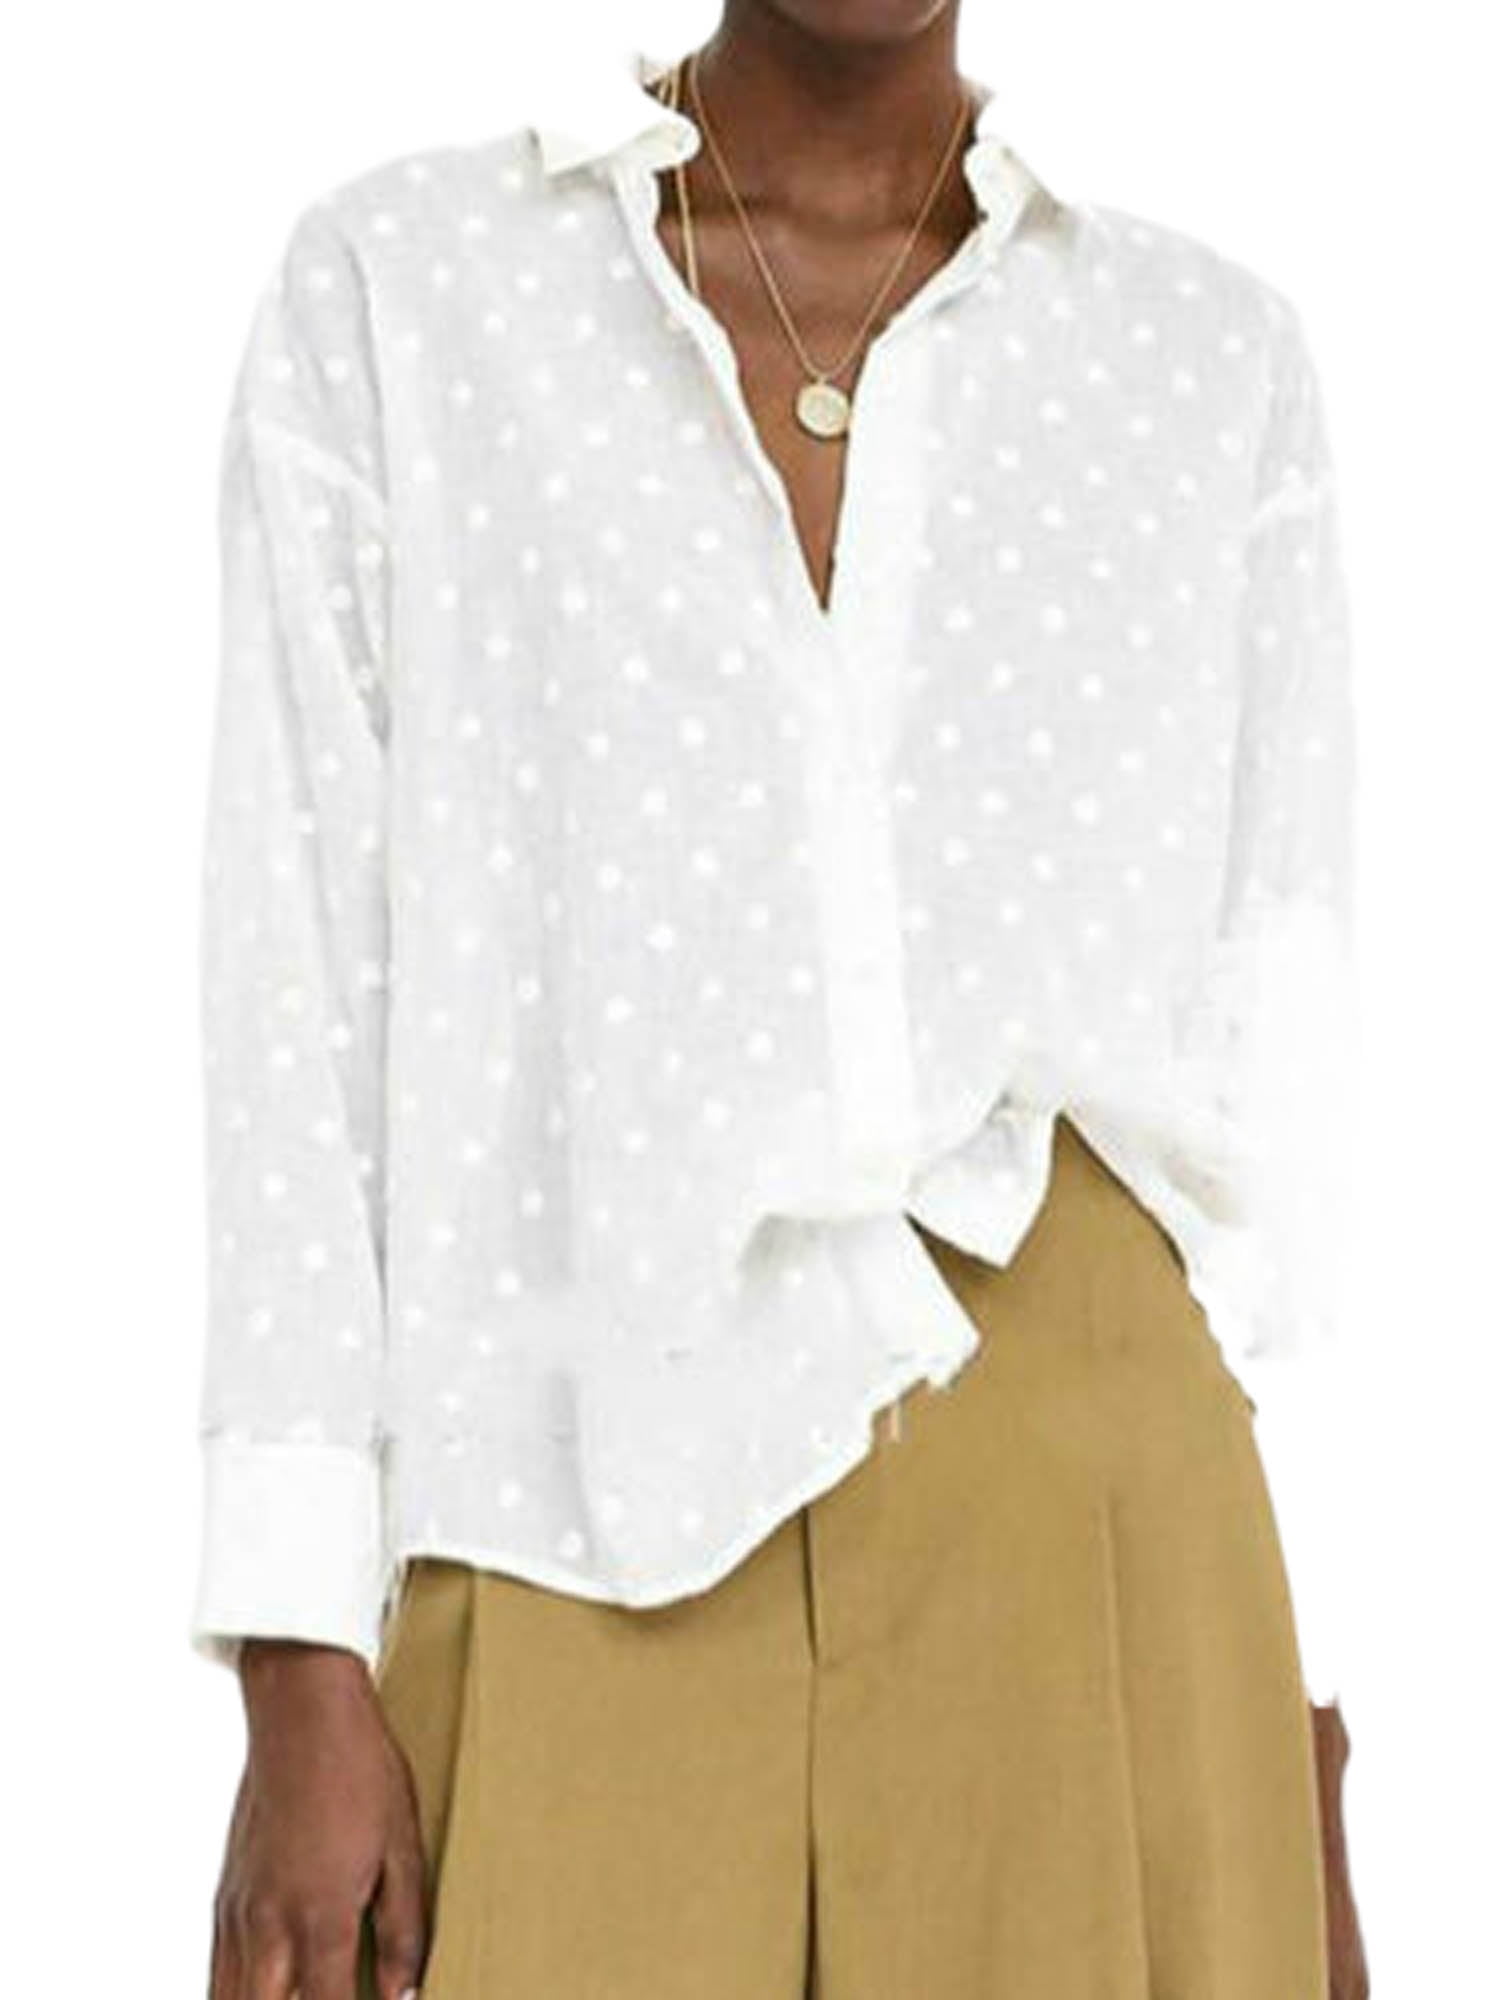 Nituyy Women's White Polka Dot Blouses Button Down Long Sleeve Pom Pom  Blouse Shirts Sheer Mesh Cover Up Tops